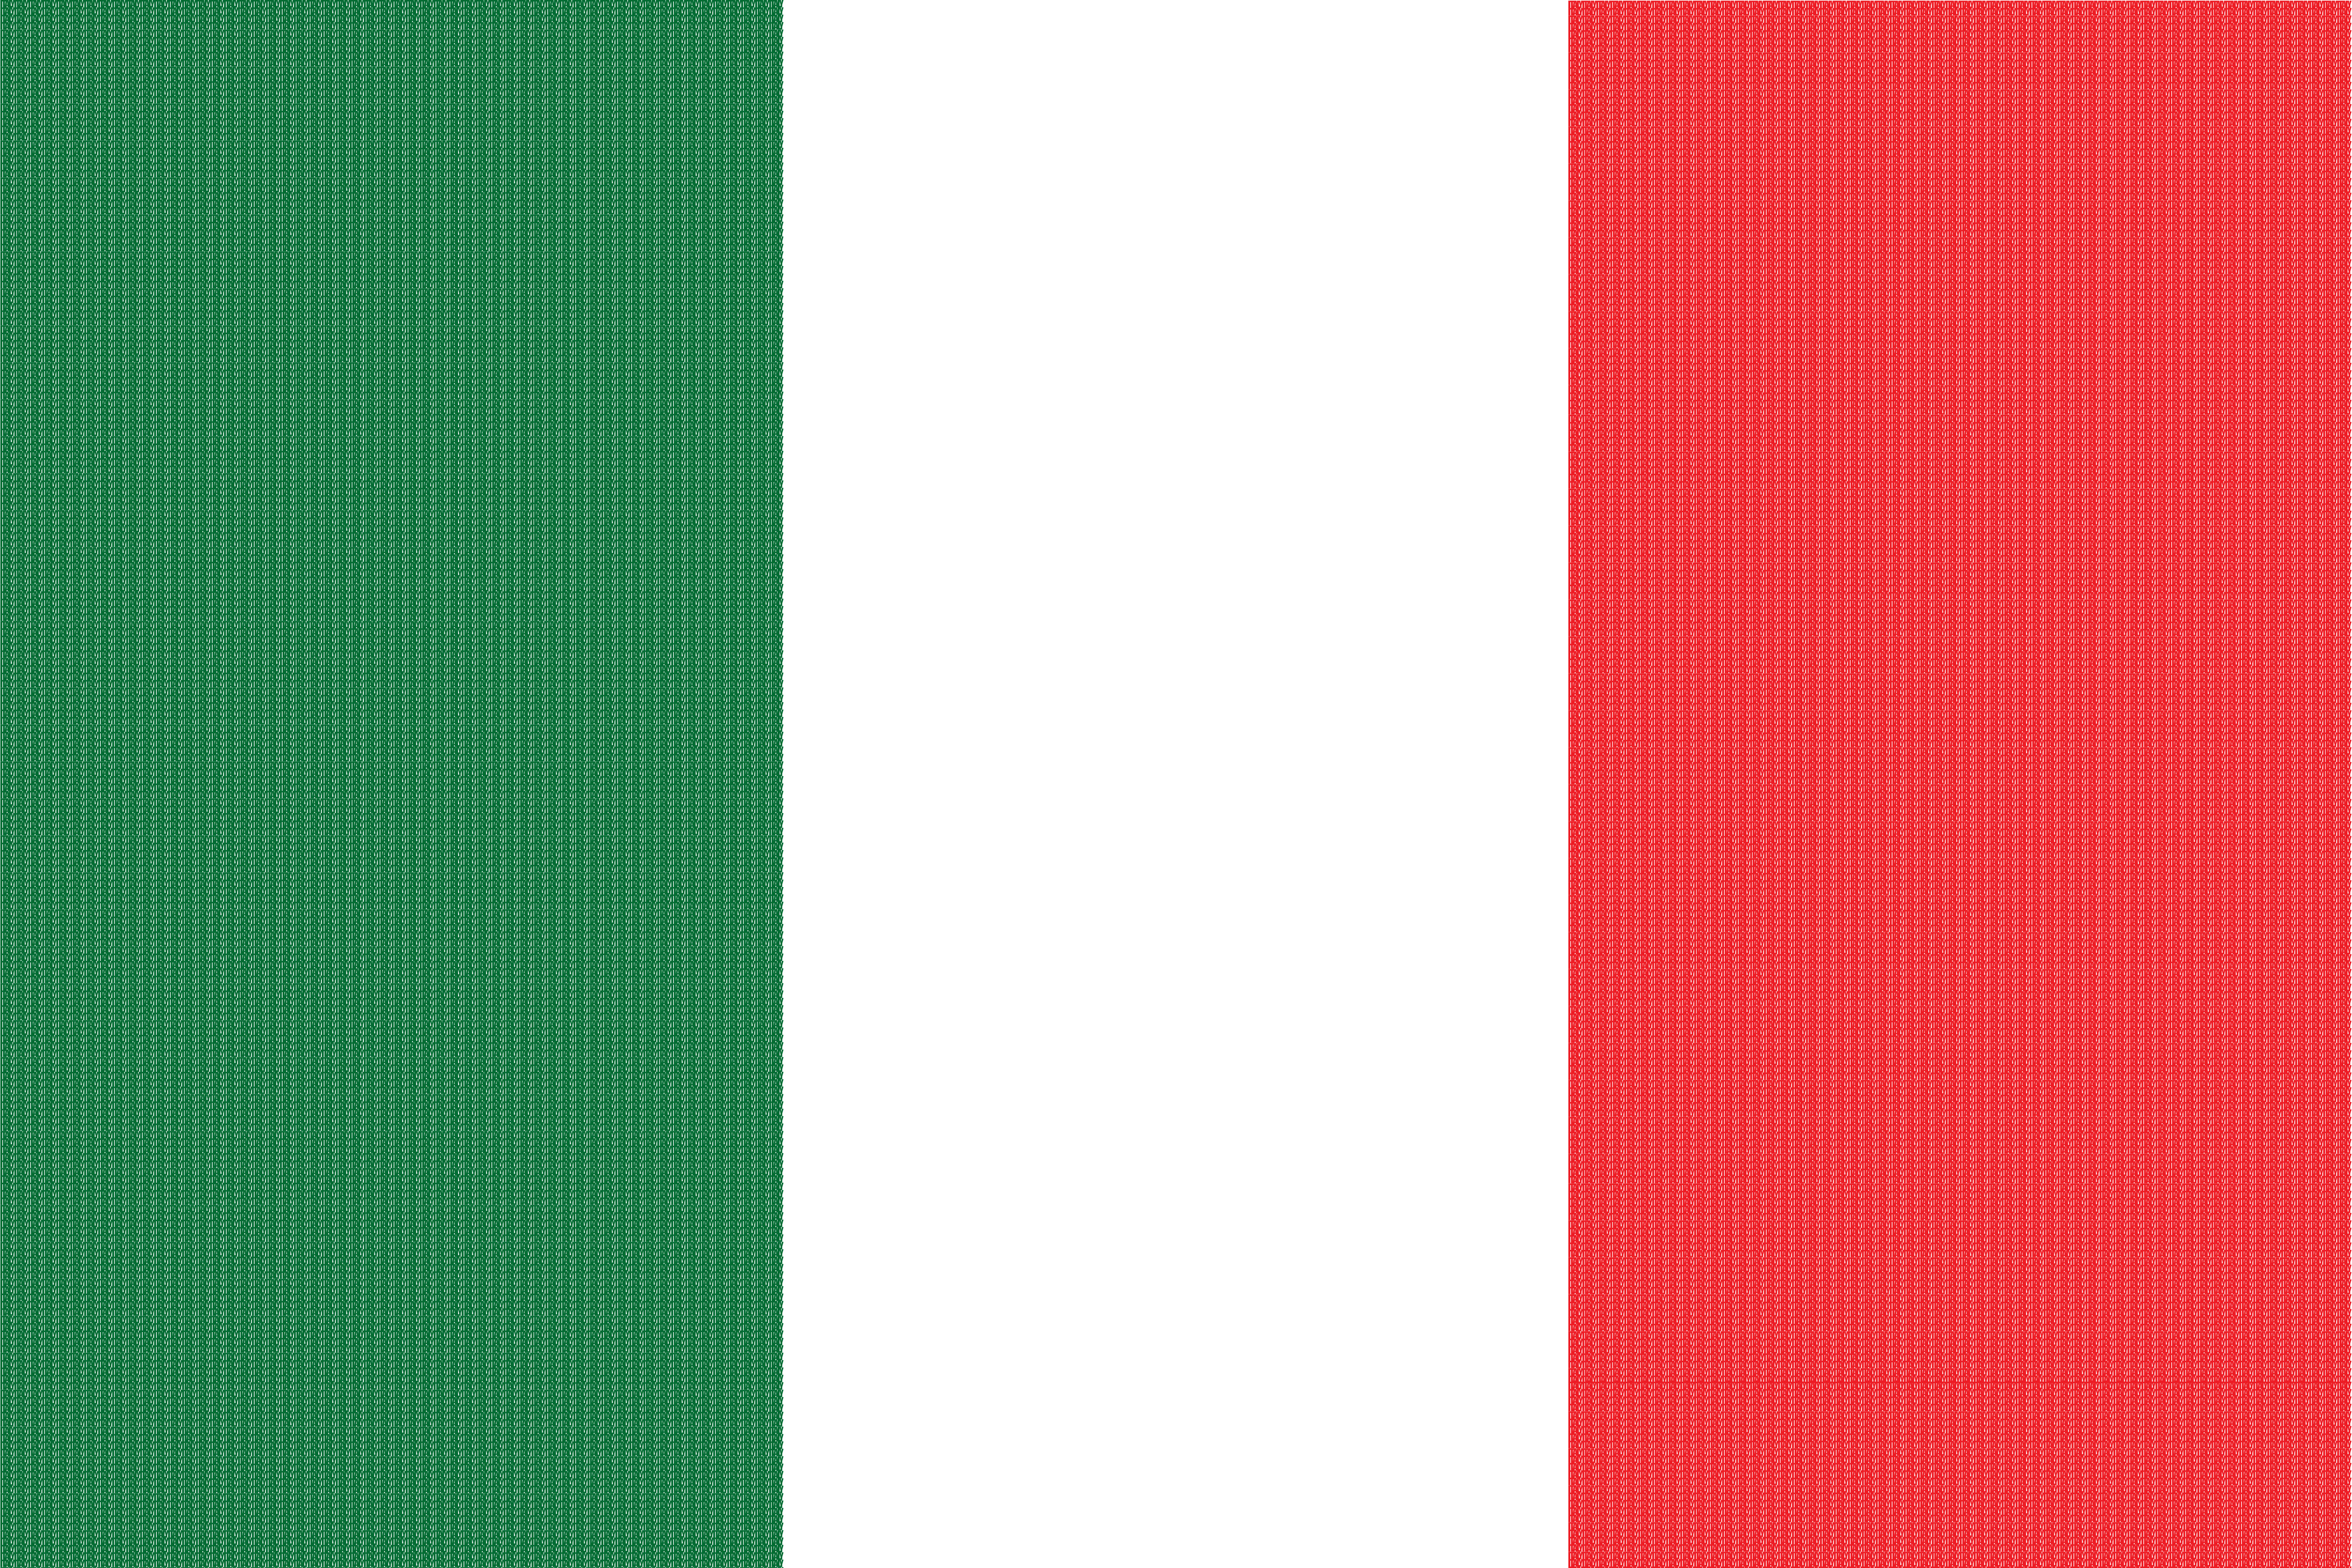 Source Url Jobspapa Italian Flag Wallpaper Portal Html